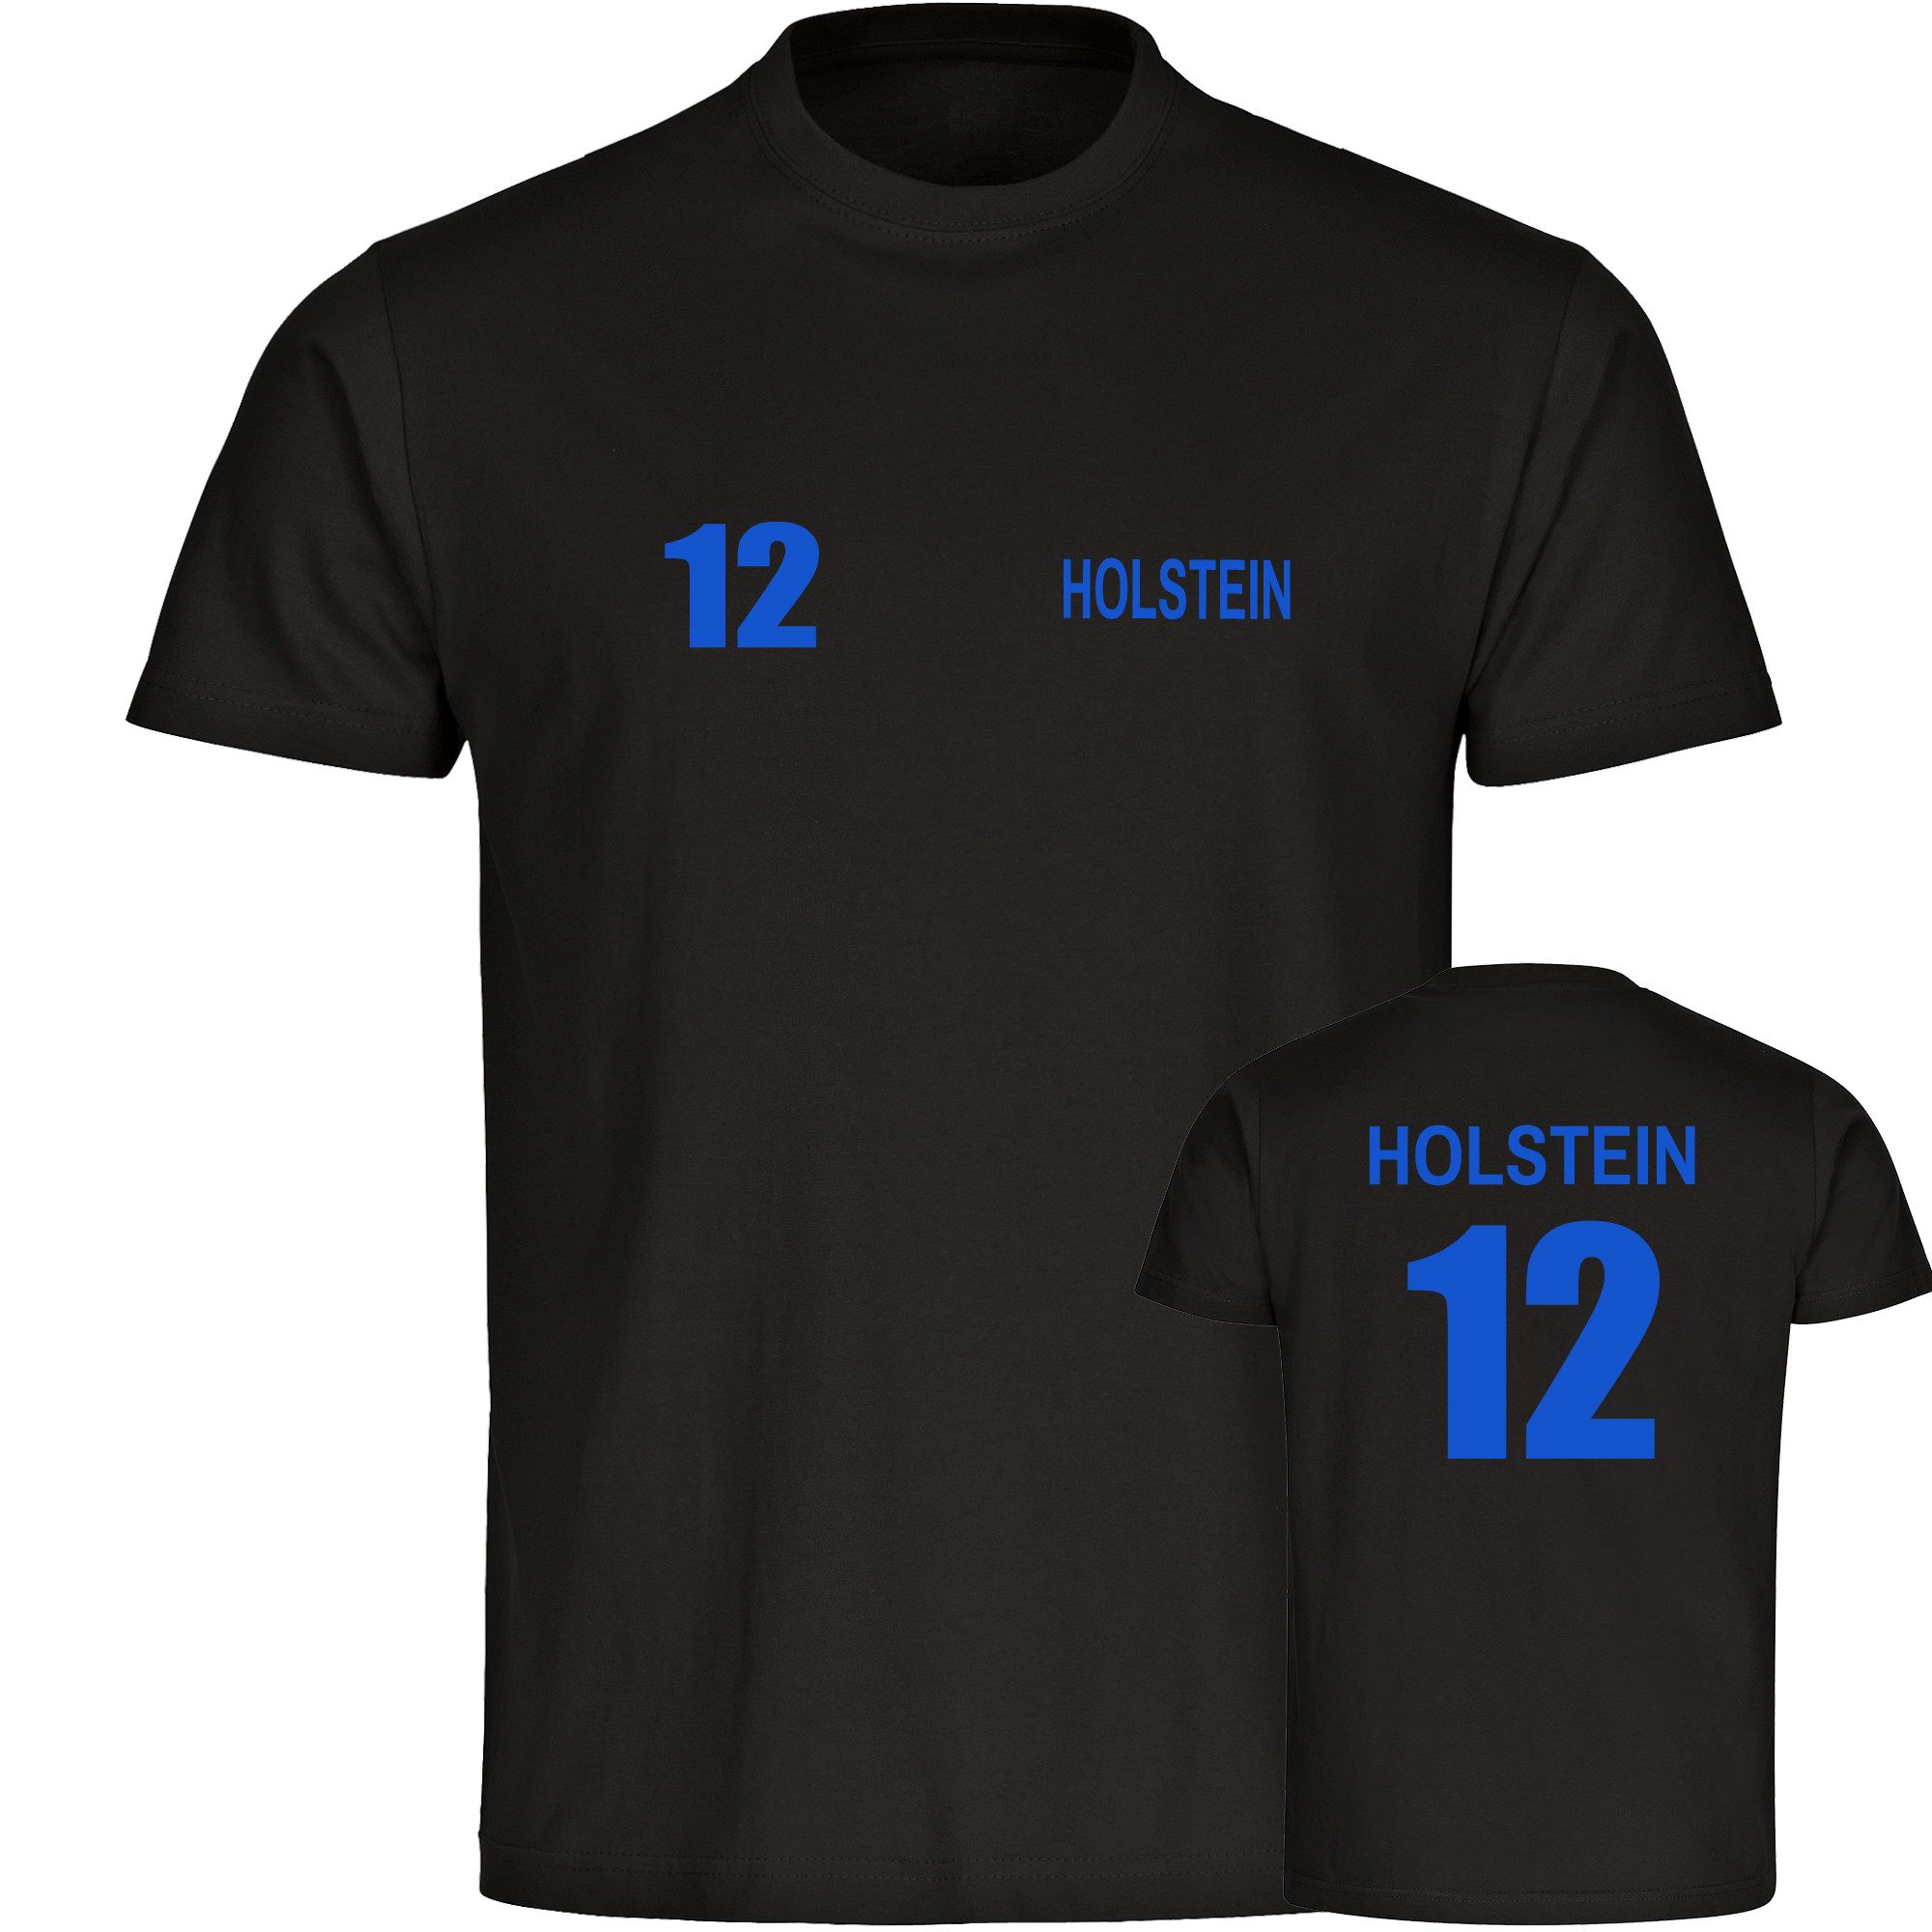 multifanshop T-Shirt Herren Holstein - Trikot 12 - Männer